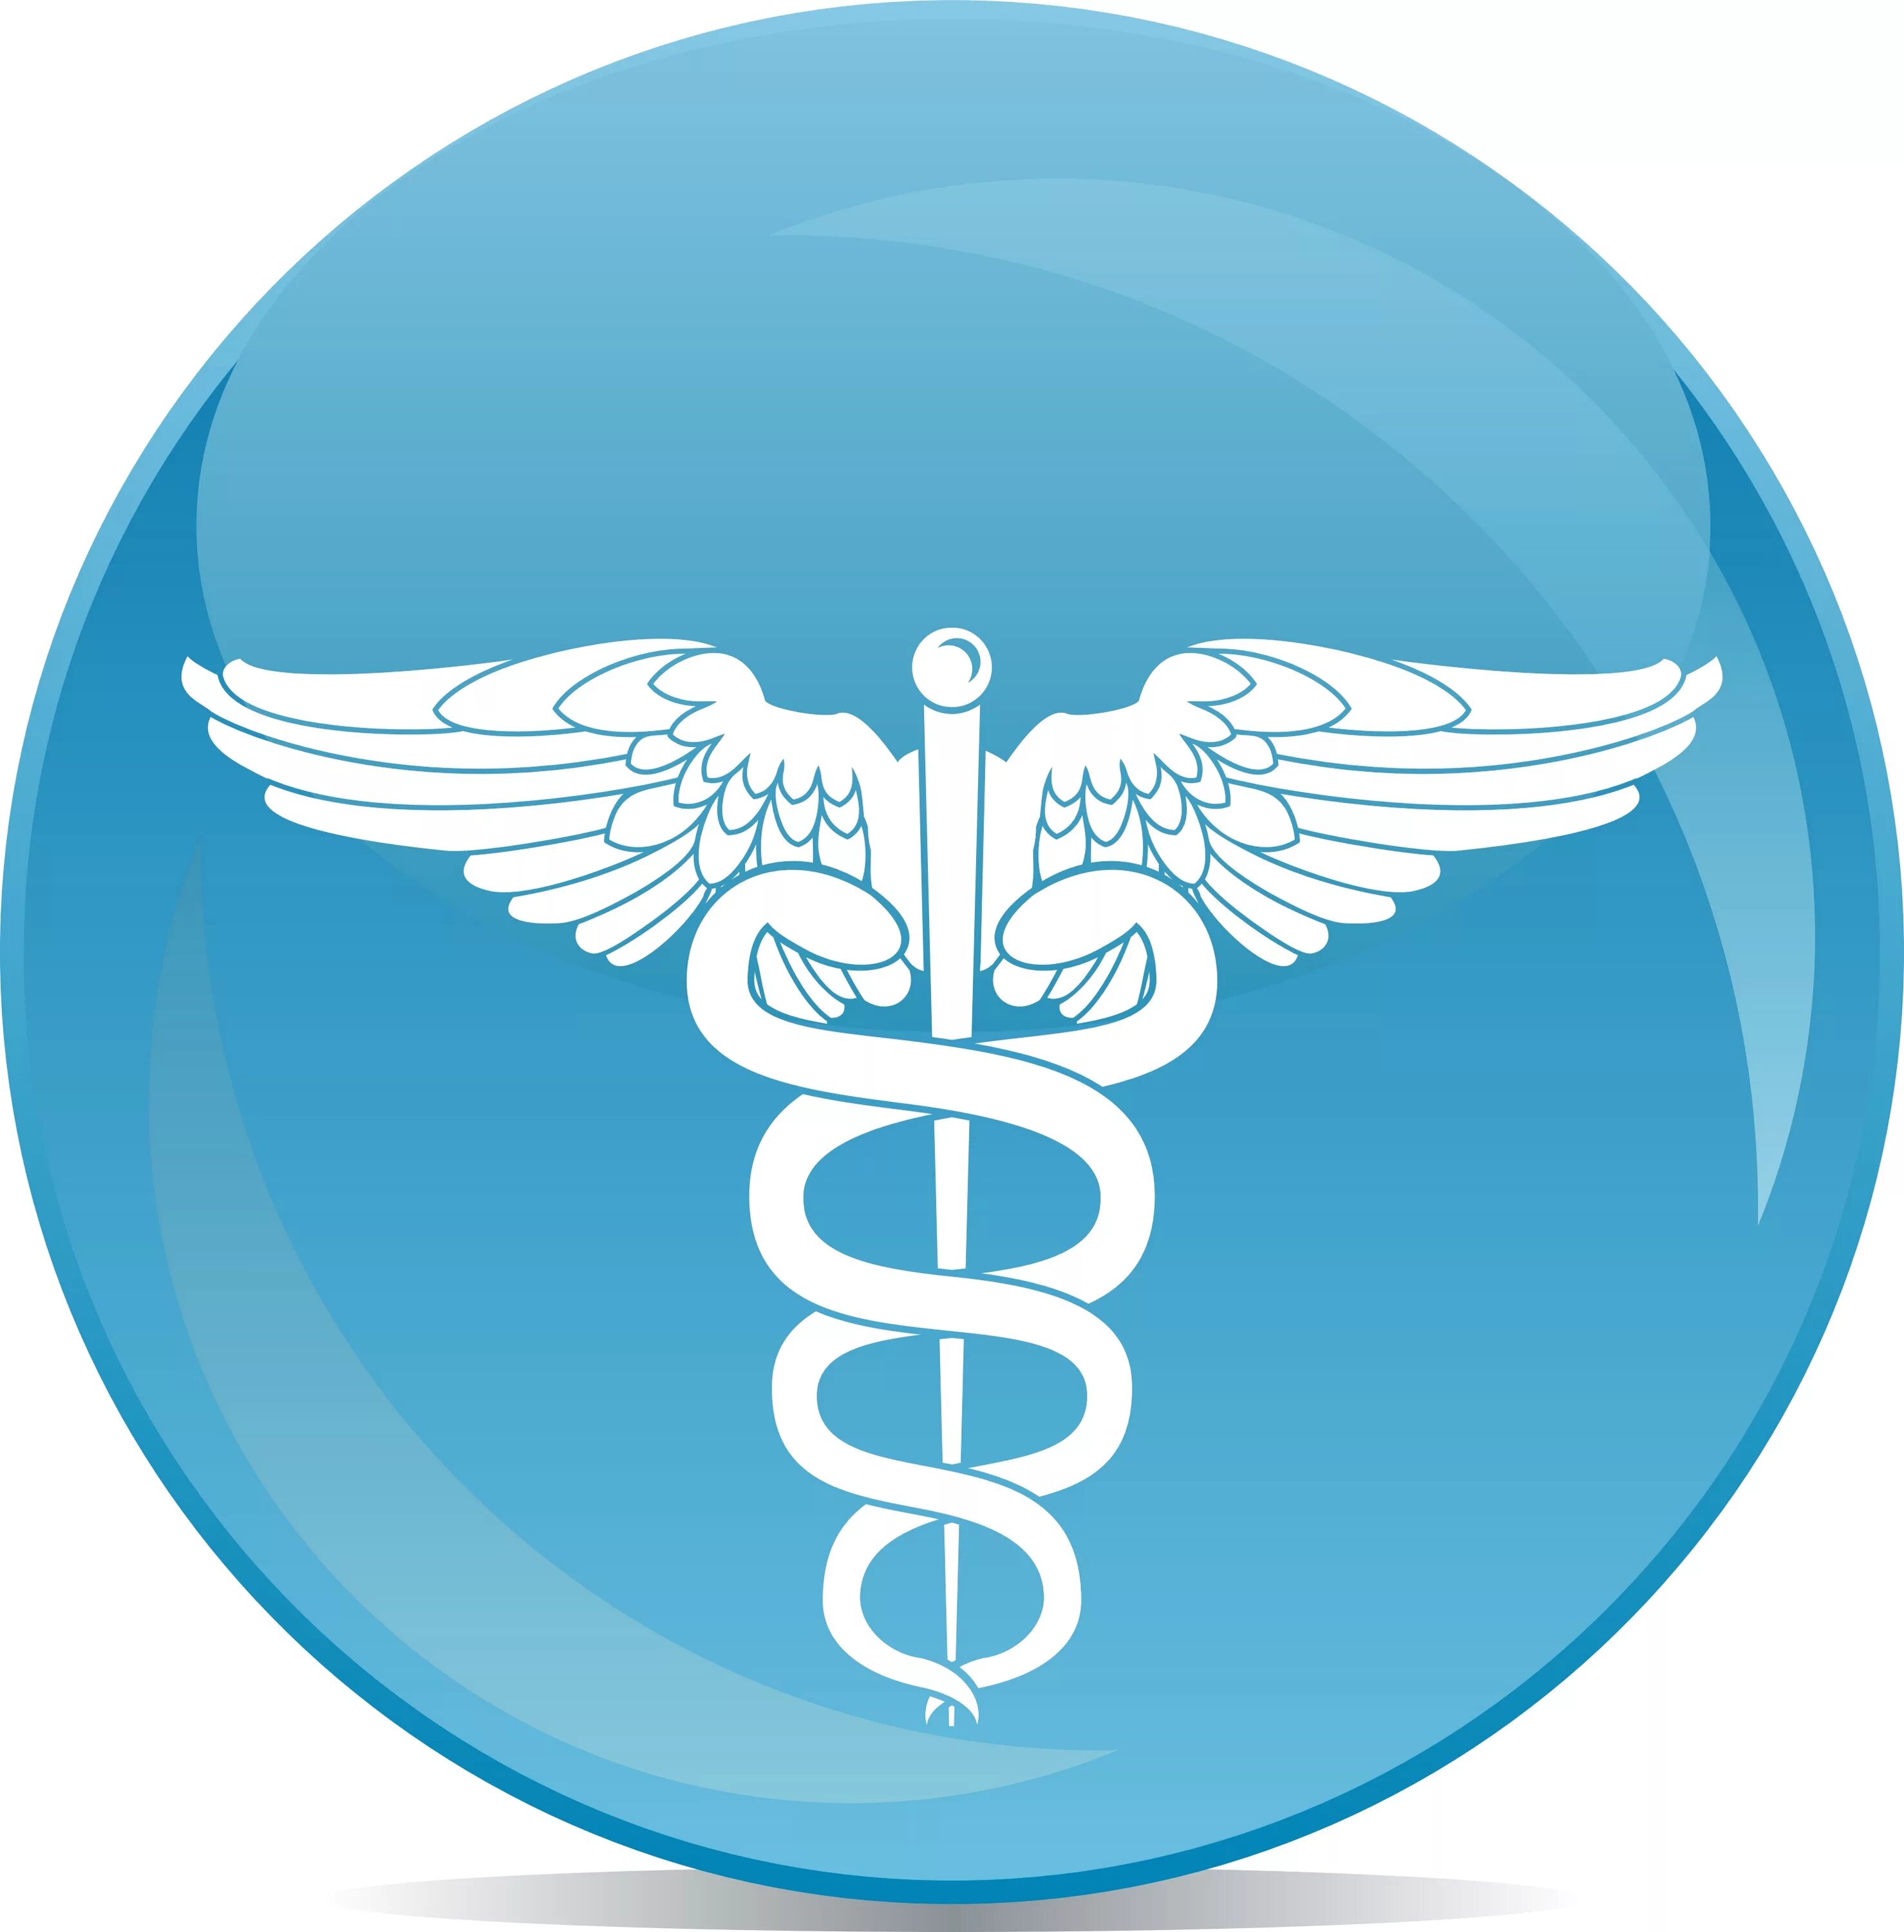 Медицина символ. Медицинский знак. Медицинские символы. Логотип медицины. Эмблема врача.